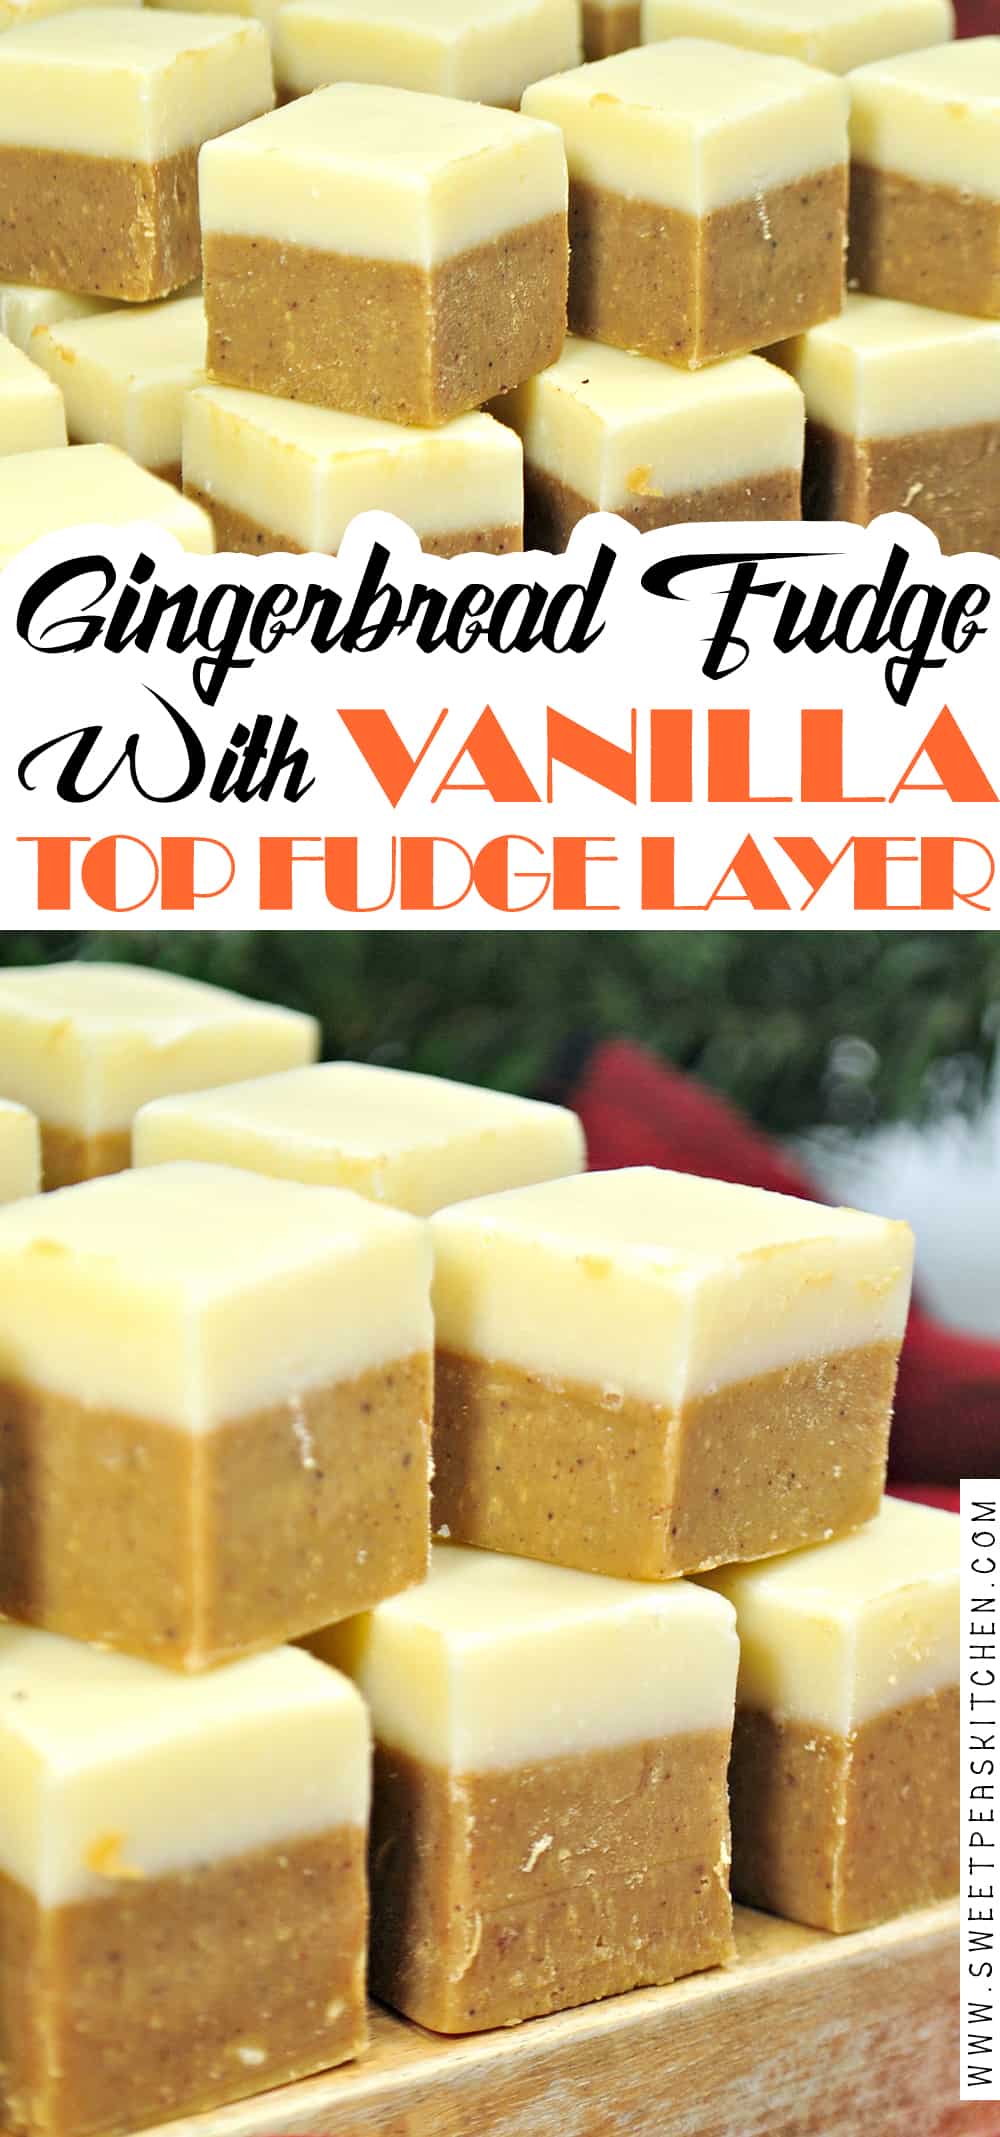 Gingerbread Fudge Recipe with Vanilla Top Fudge Layer